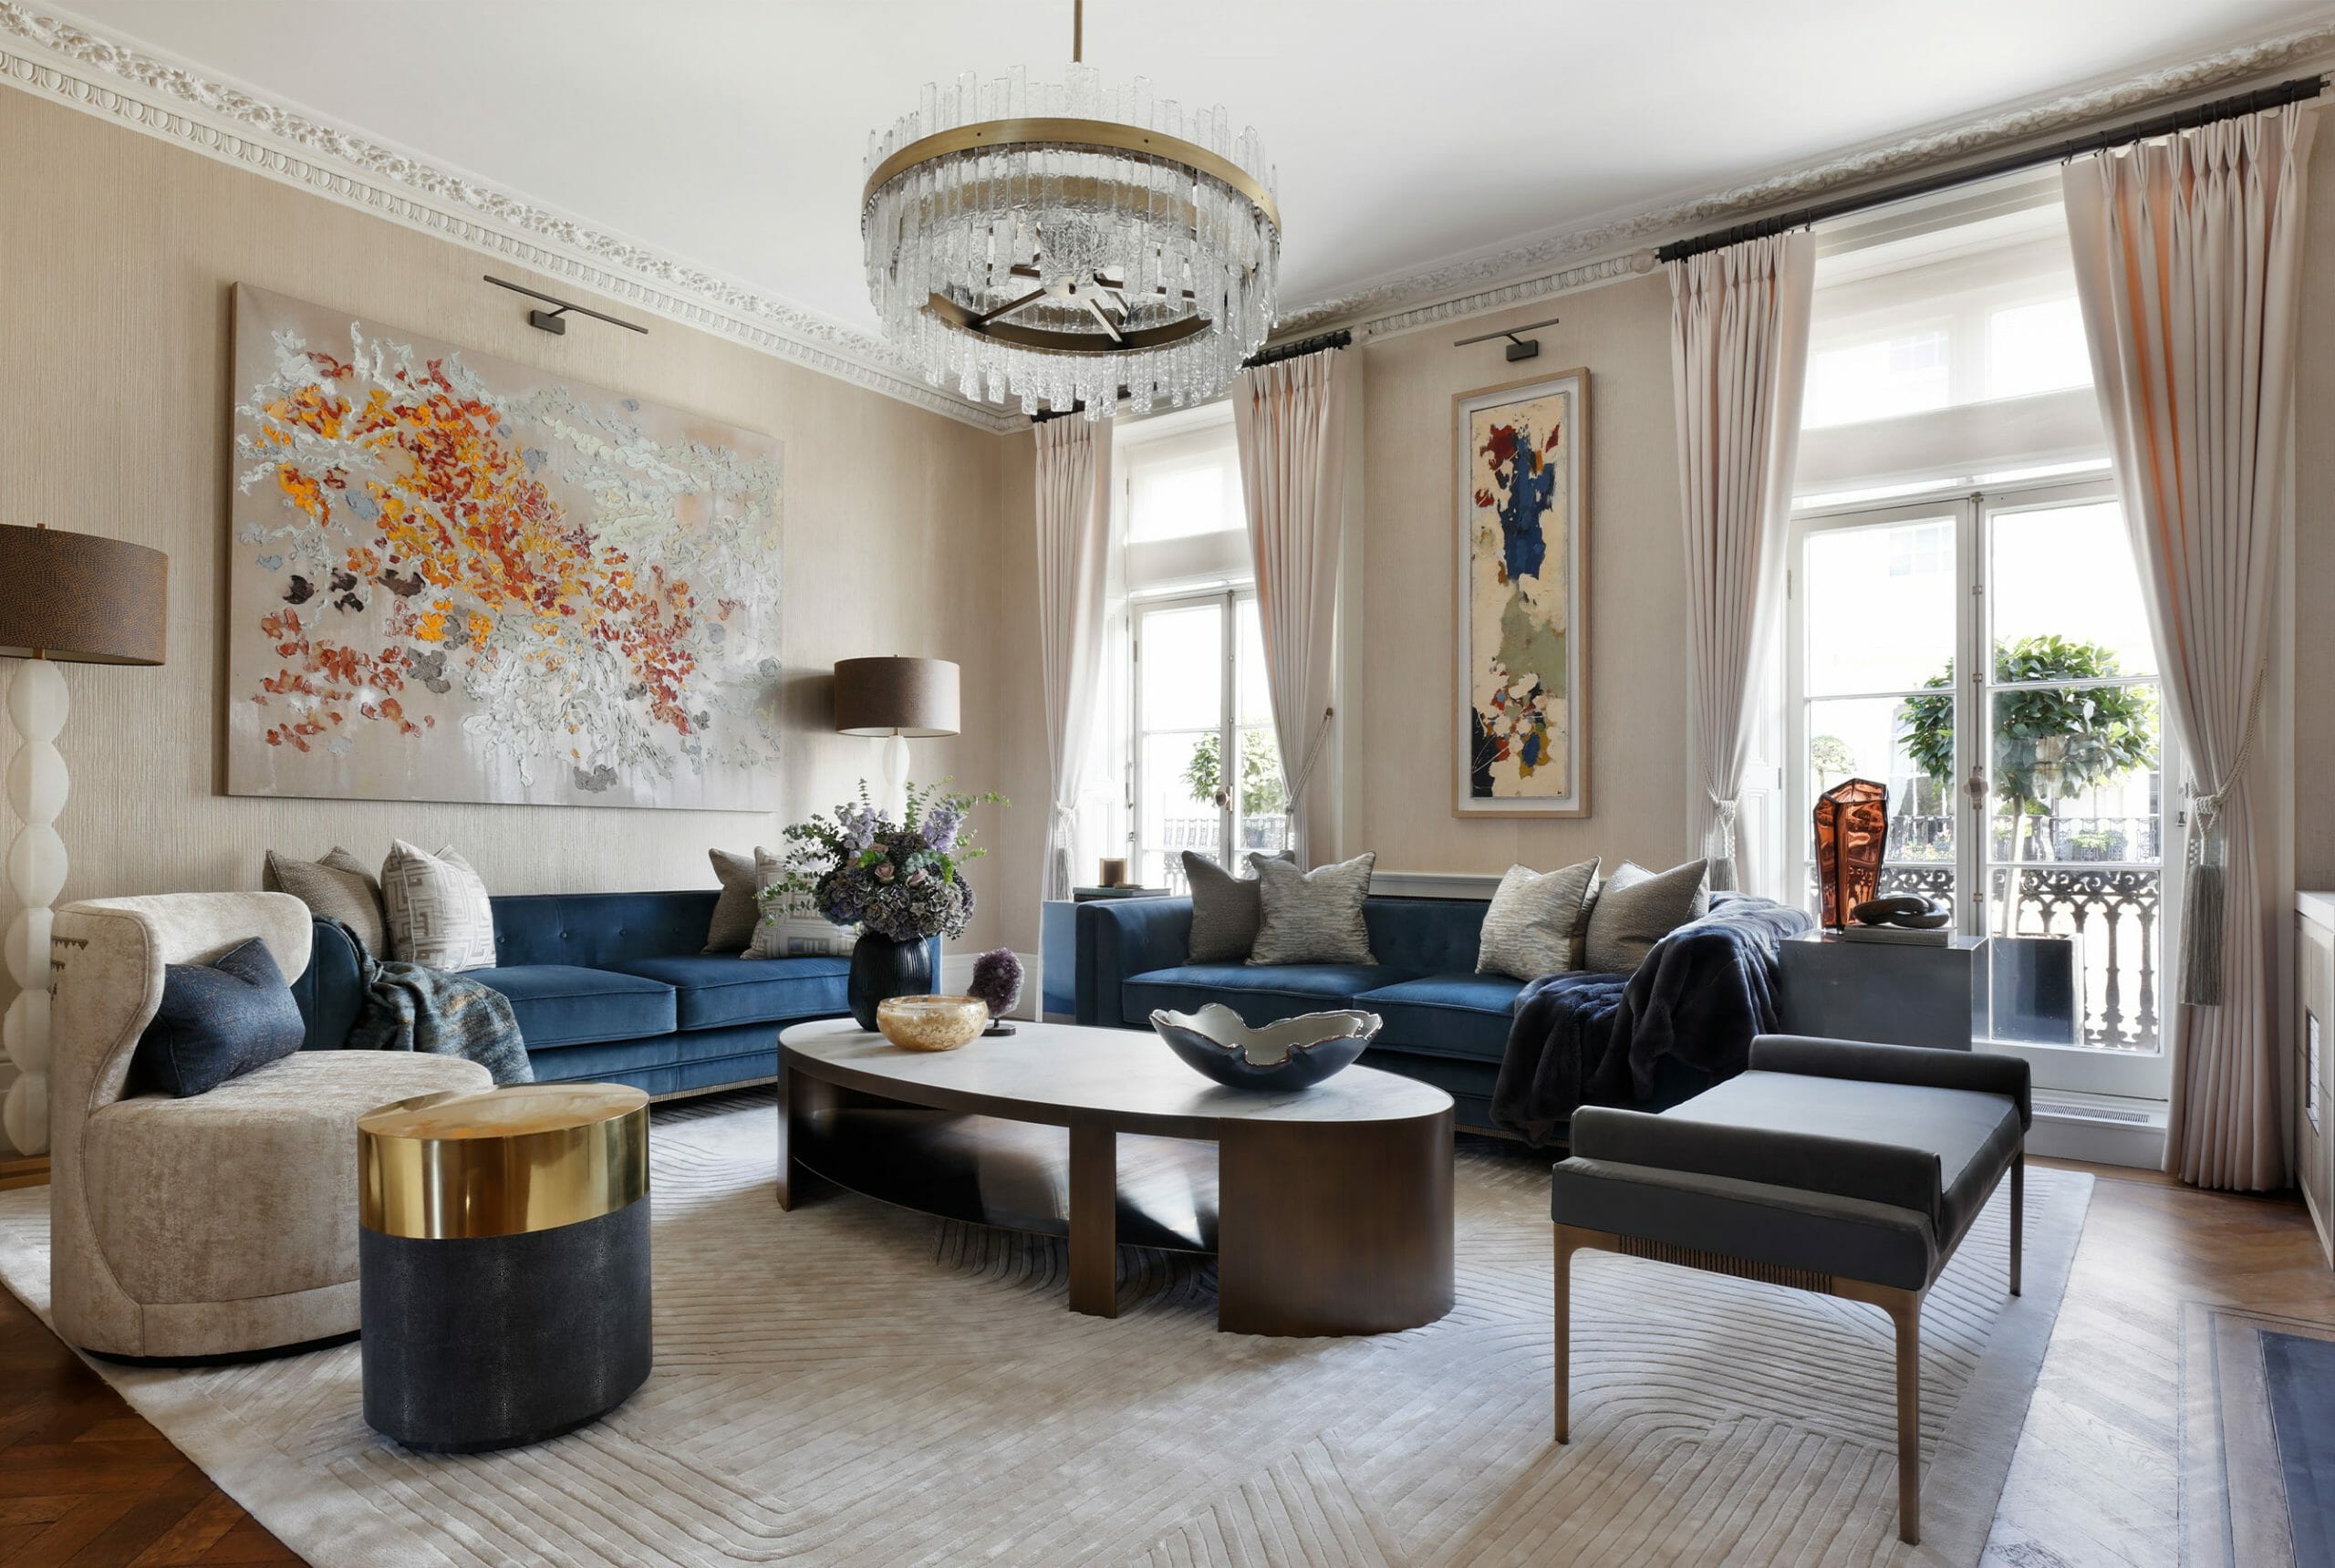 https://www.decorilla.com/online-decorating/wp-content/uploads/2021/02/best-living-room-layouts-scaled.jpg